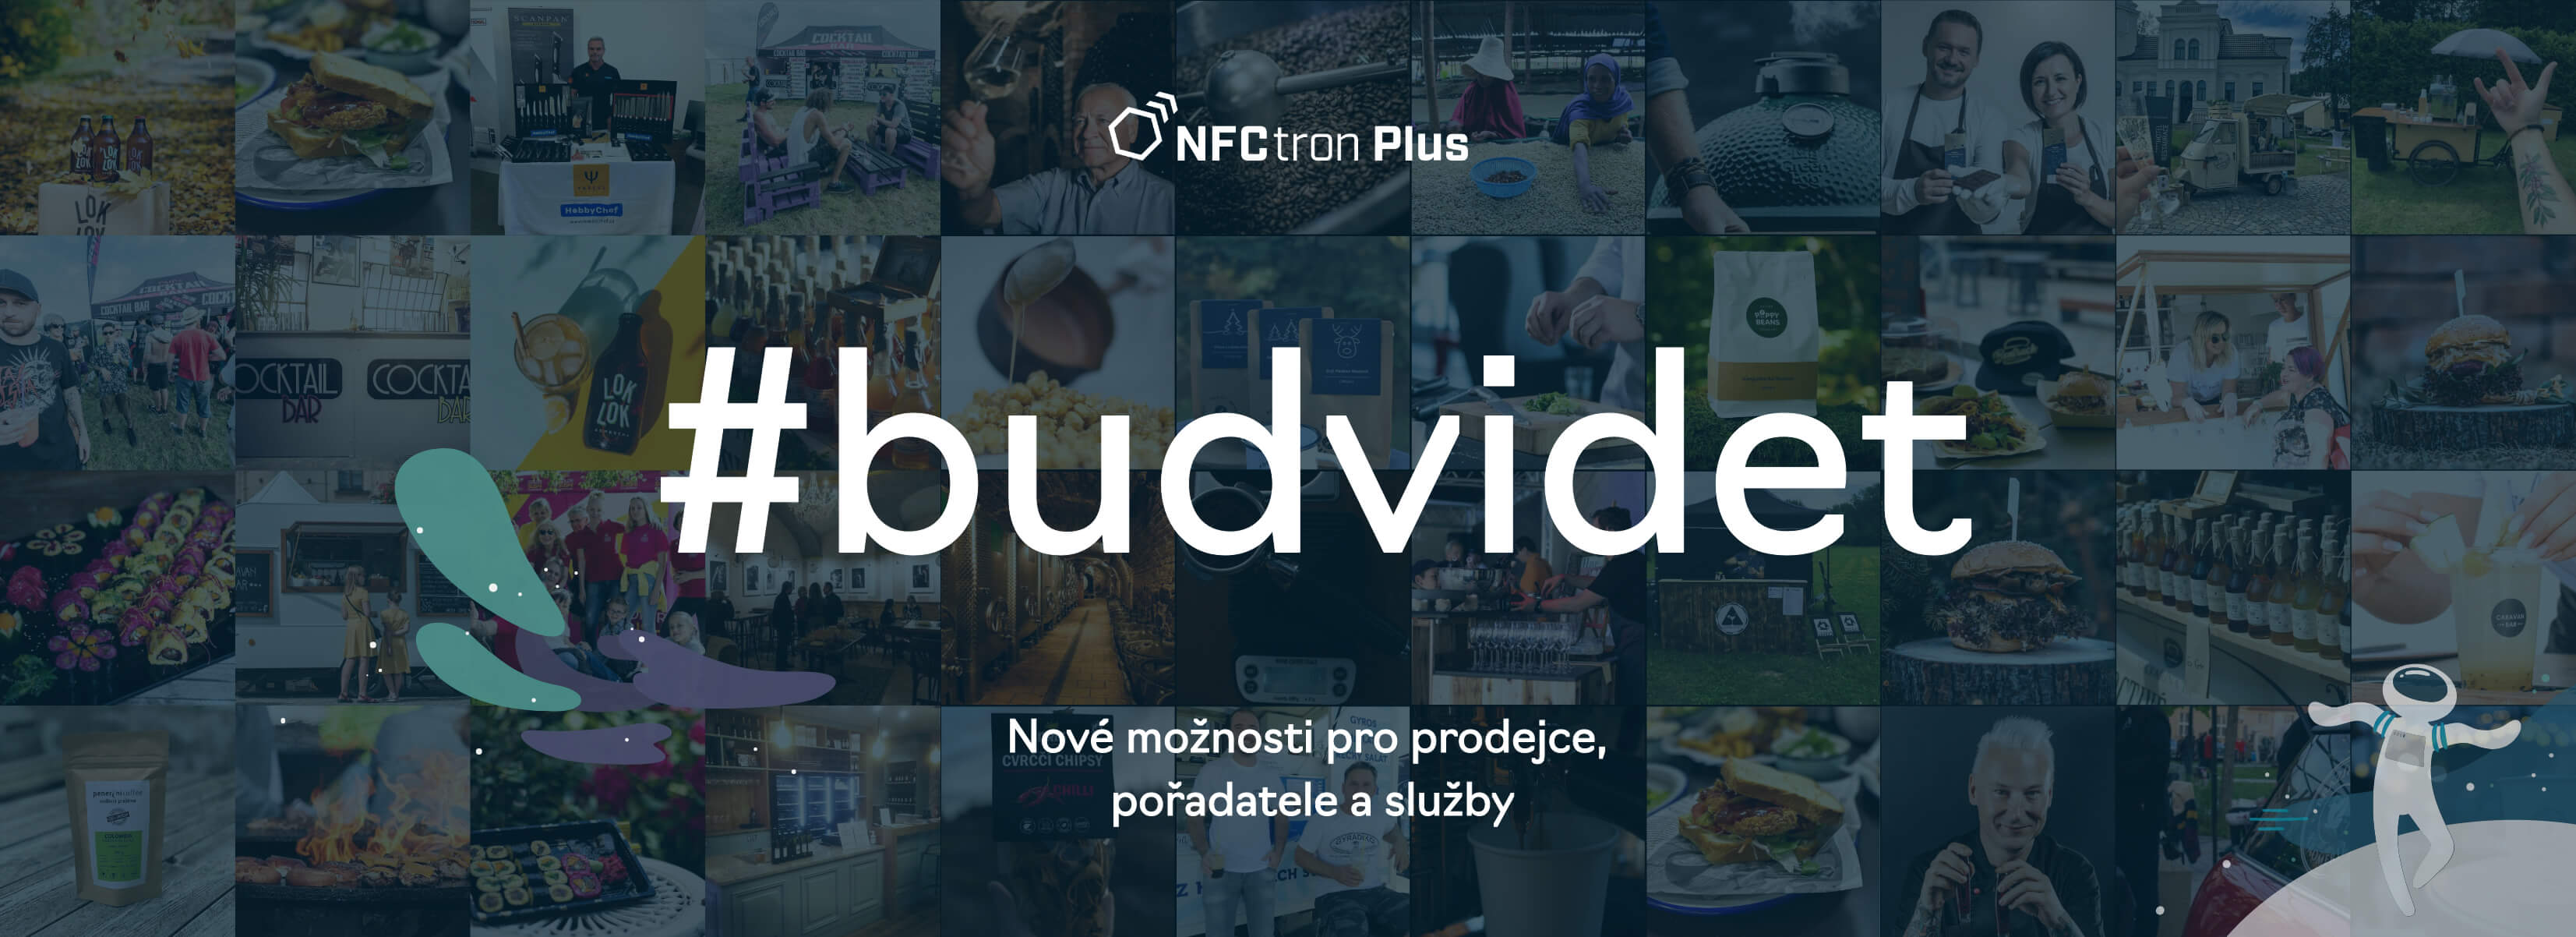 #budvidet s NFCtron Plus